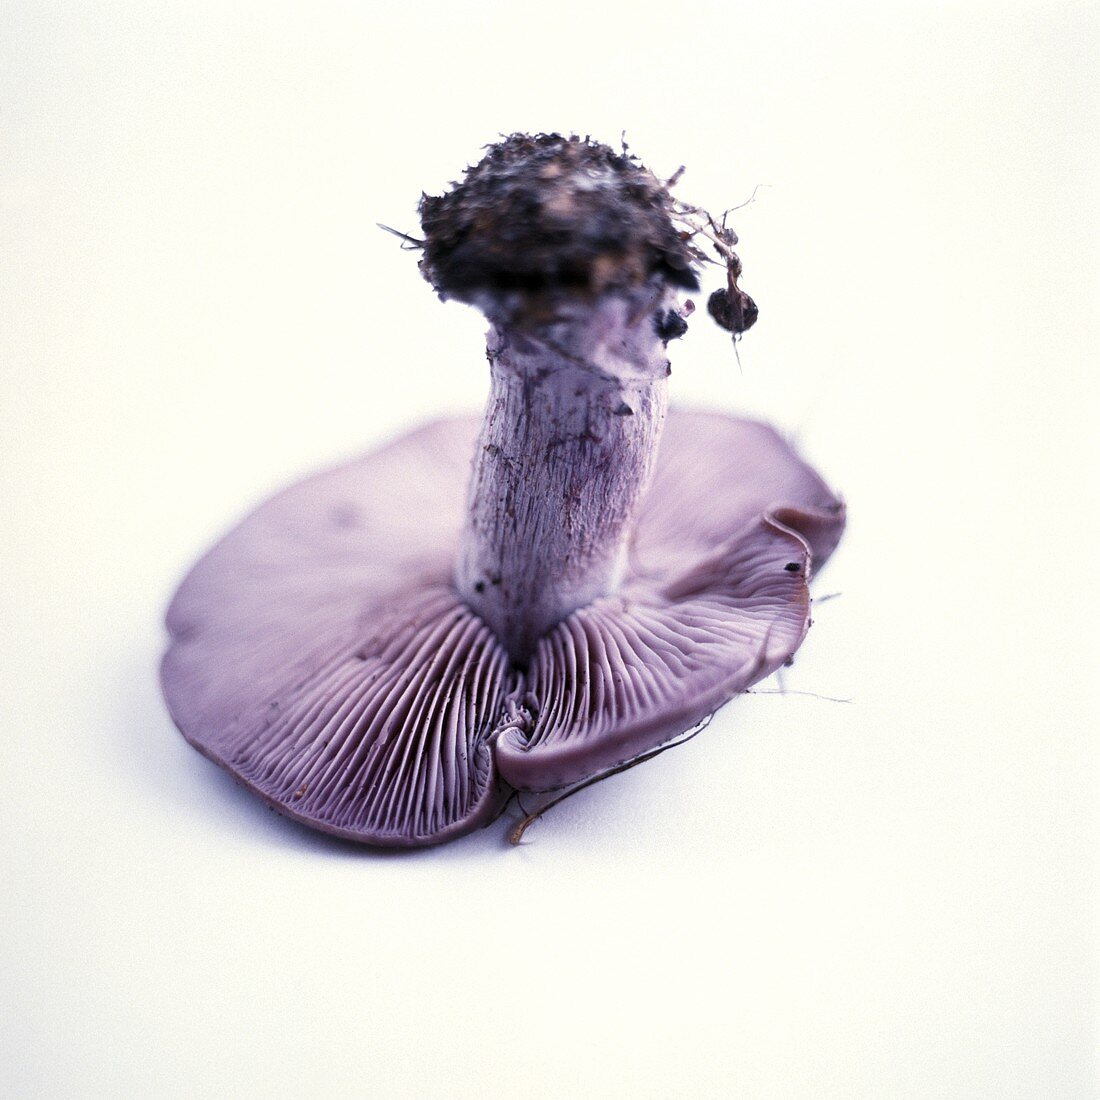 A Mushroom, Upside-down